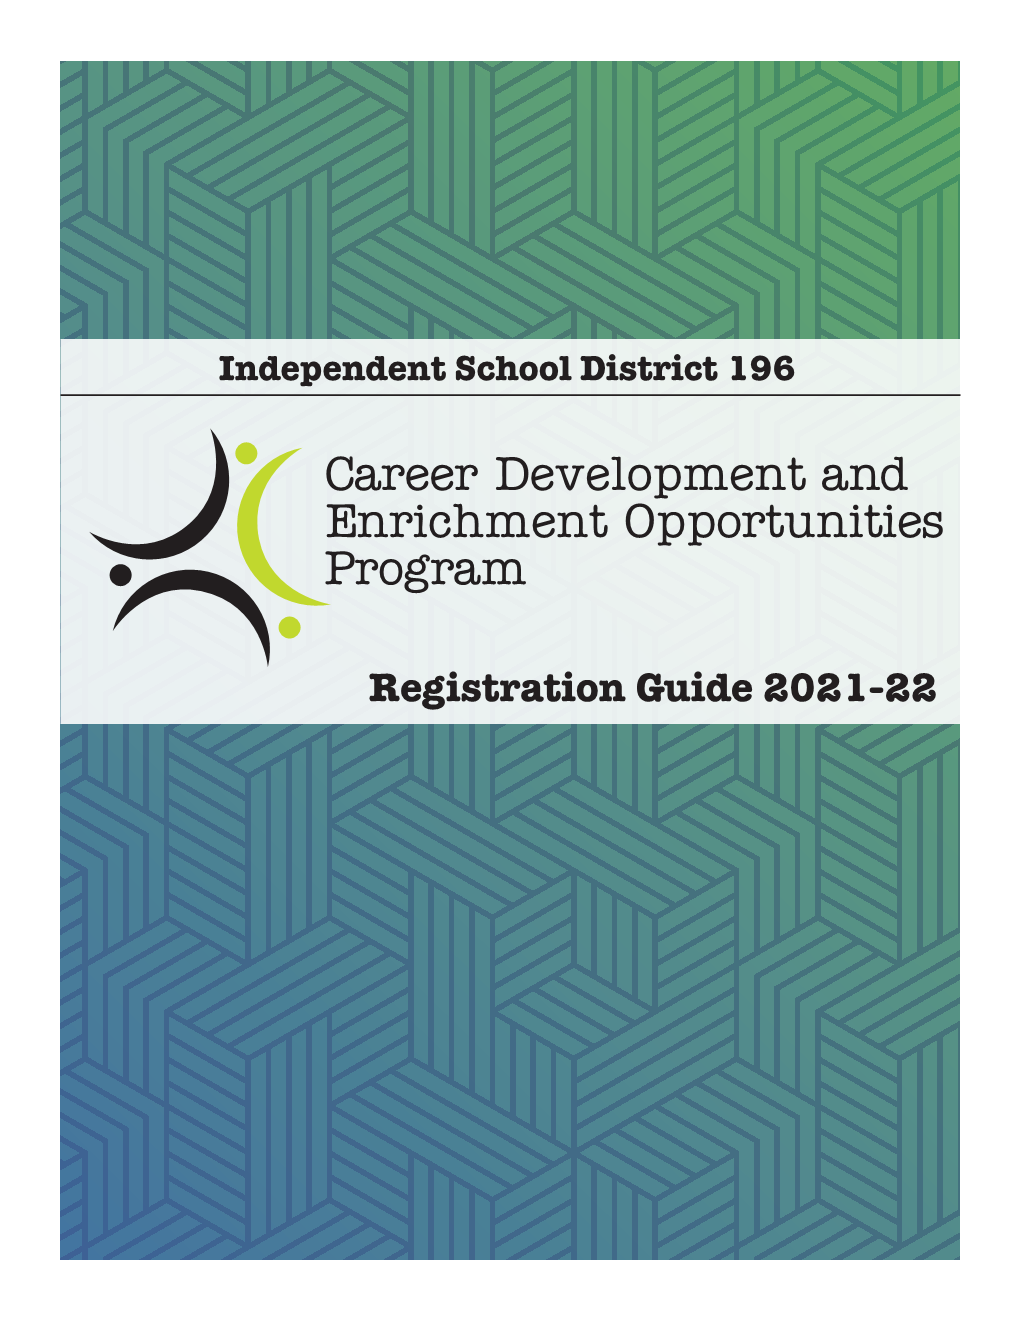 Registration Guide 2021-22 Career Development and Enrichment Opportunities Program